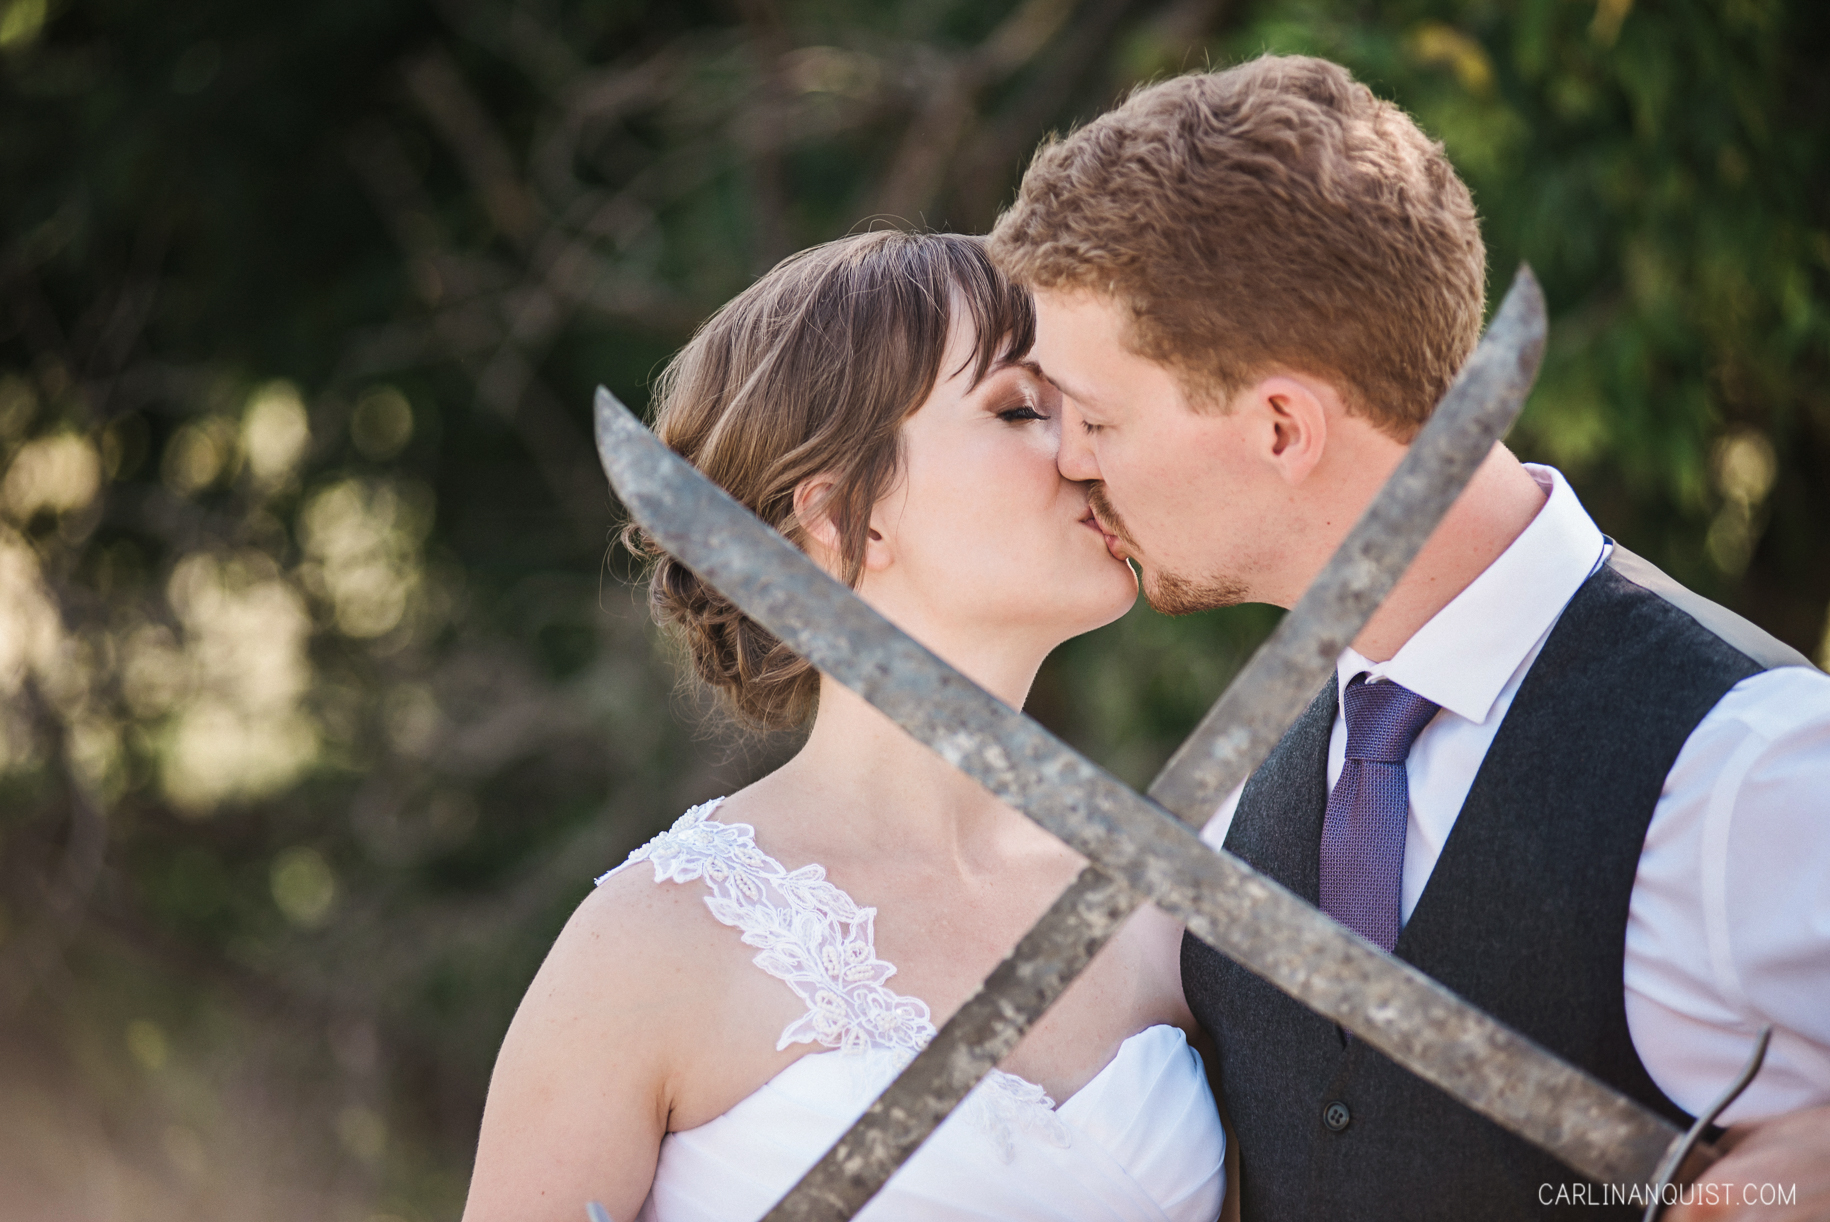 Wedding Photos with Swords